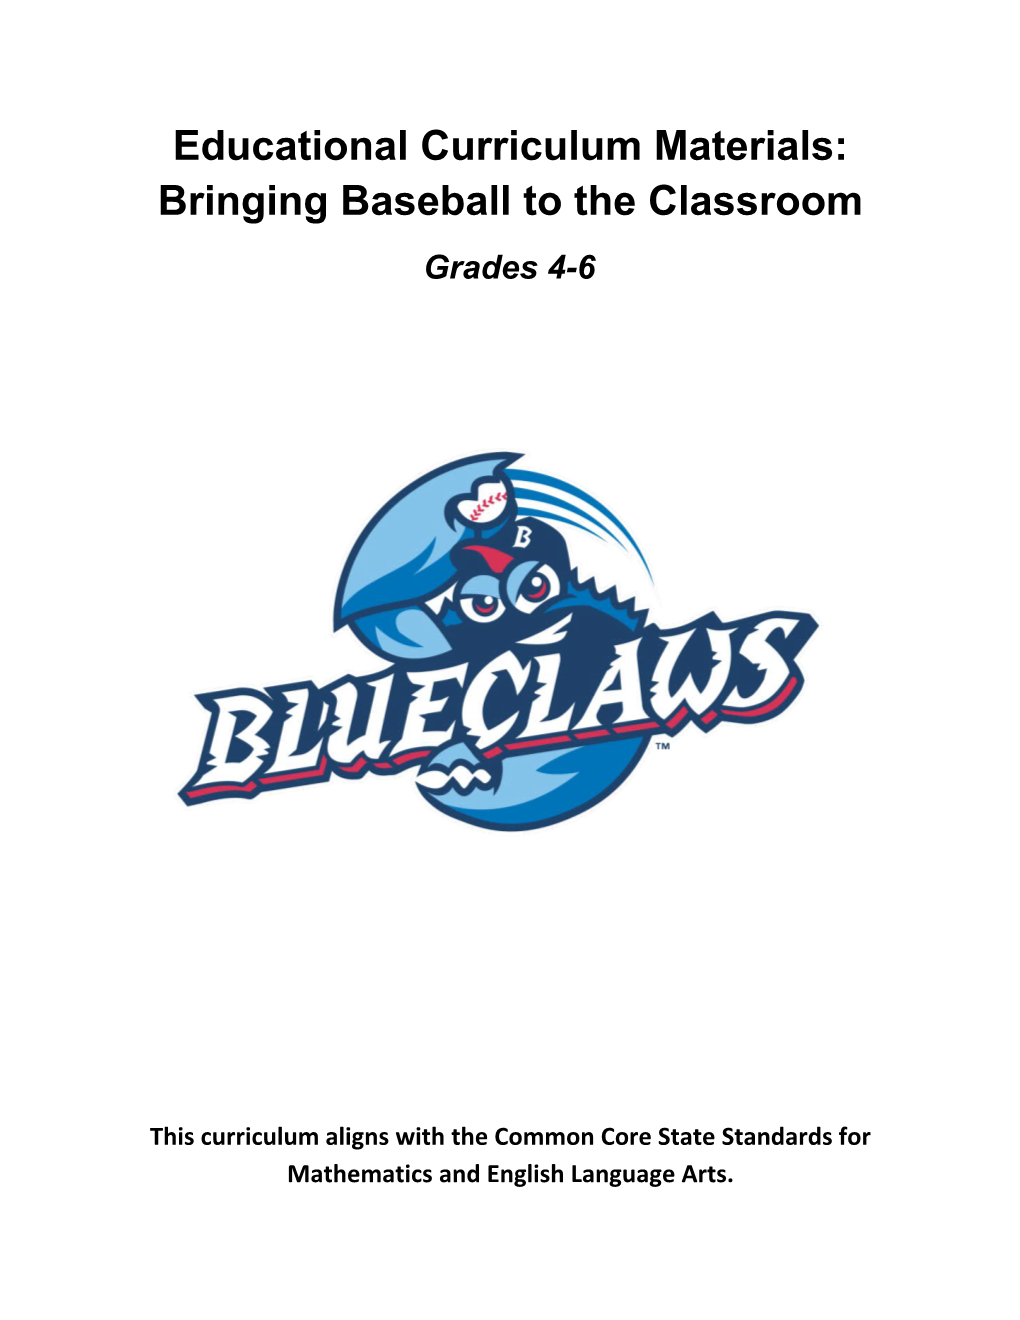 Educational Curriculum Materials: Bringing Baseball to the Classroom